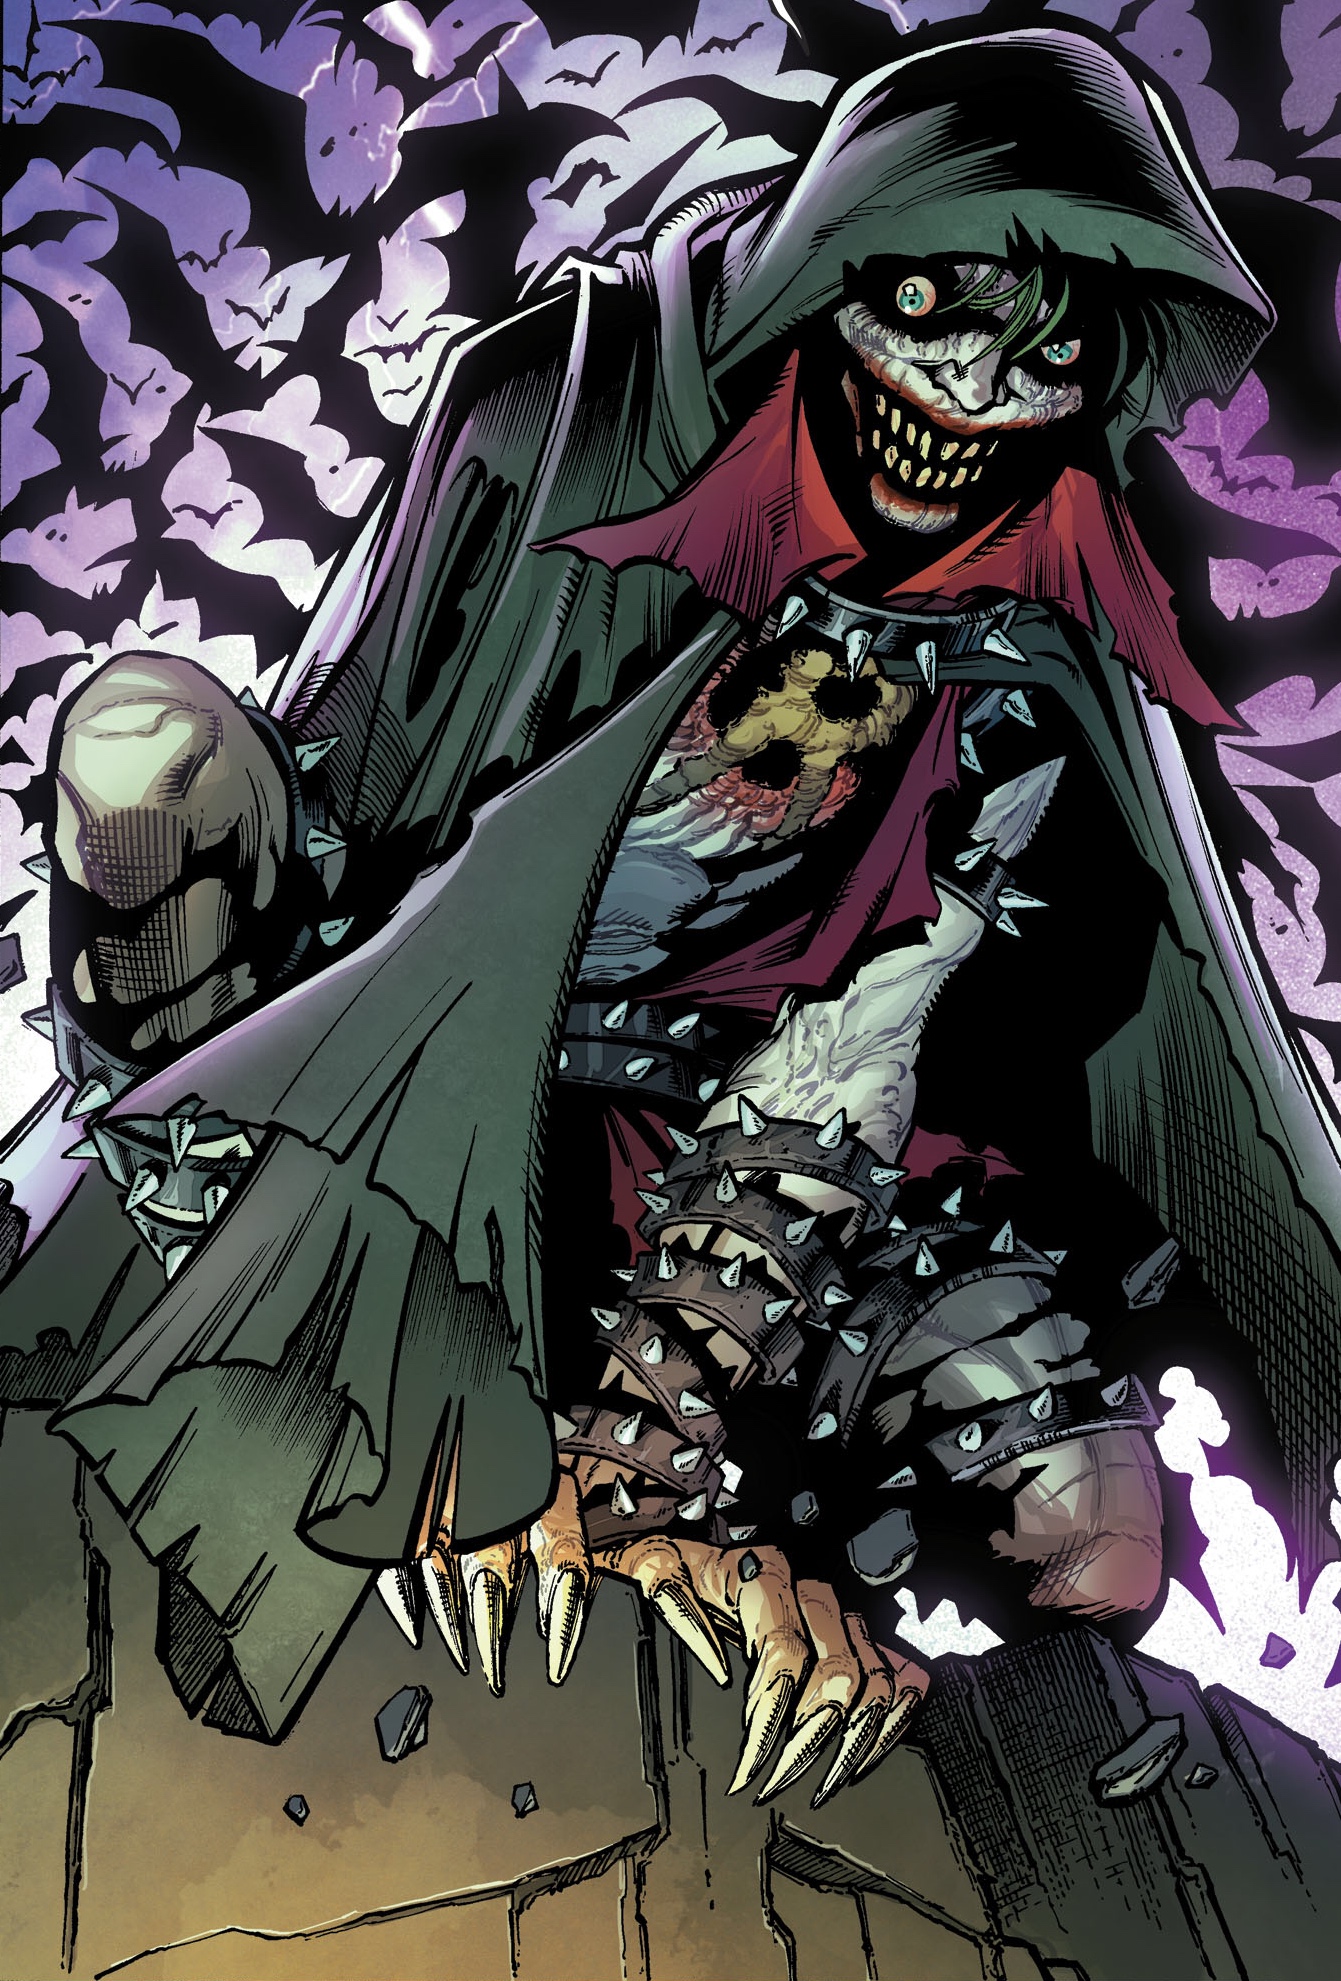 joker batman evil and good